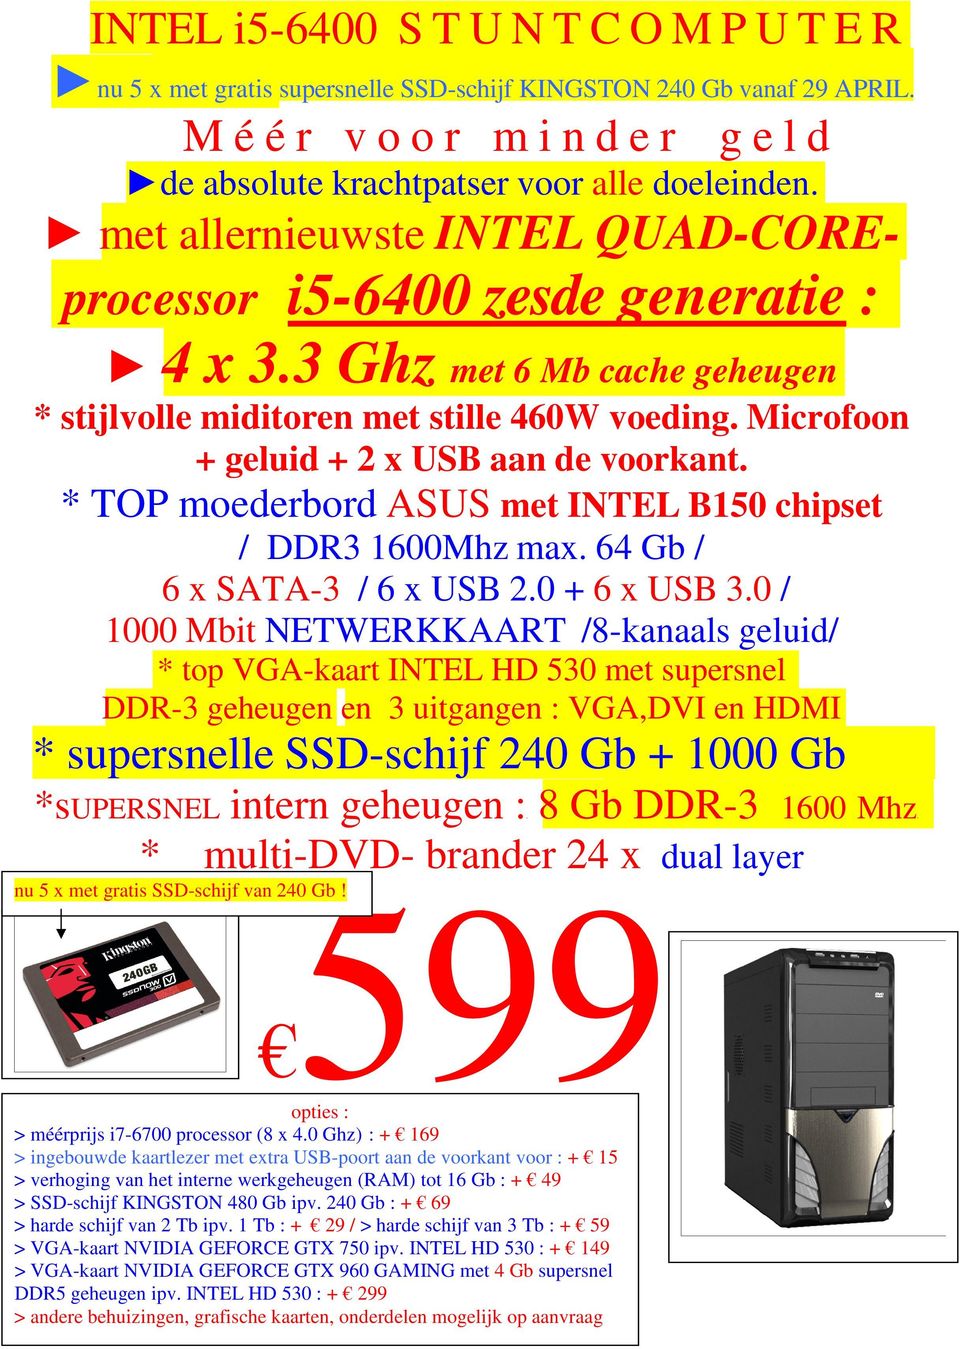 * TOP moederbord ASUS met INTEL B150 chipset / DDR3 1600Mhz max. 64 Gb / 6 x SATA-3 / 6 x USB 2.0 + 6 x USB 3.